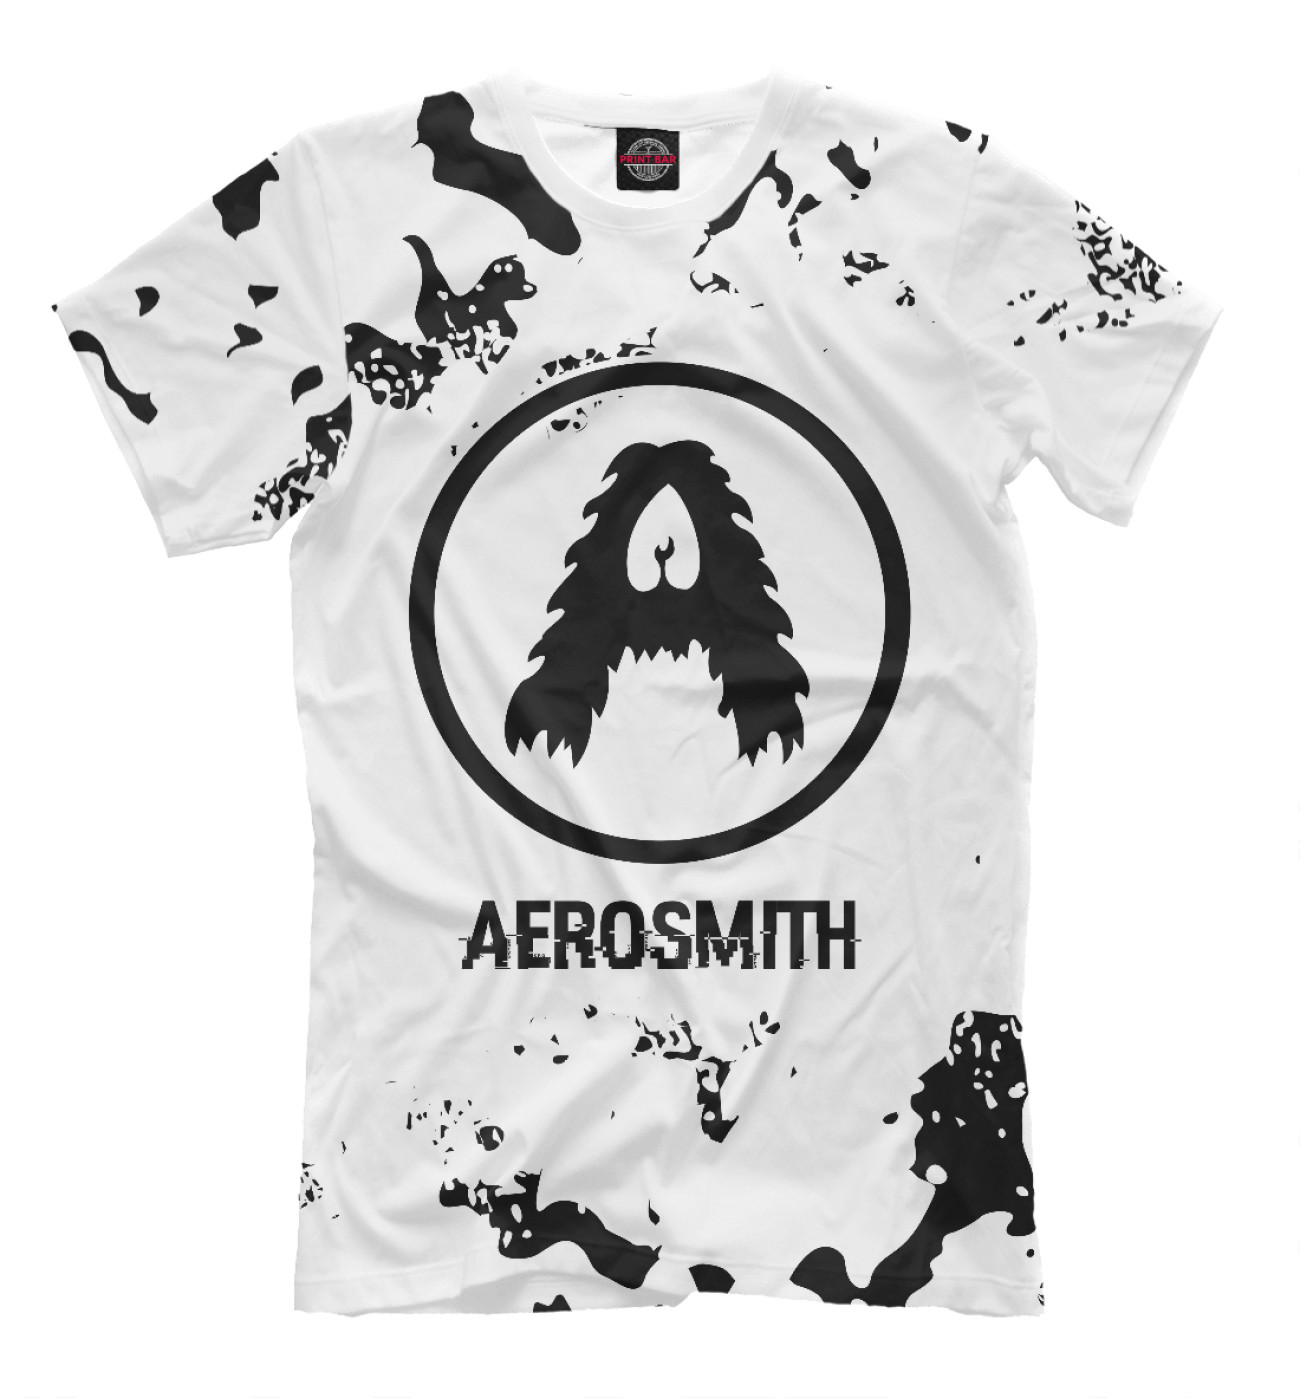 Мужская Футболка Aerosmith Glitch Light (разводы), артикул: AES-499818-fut-2